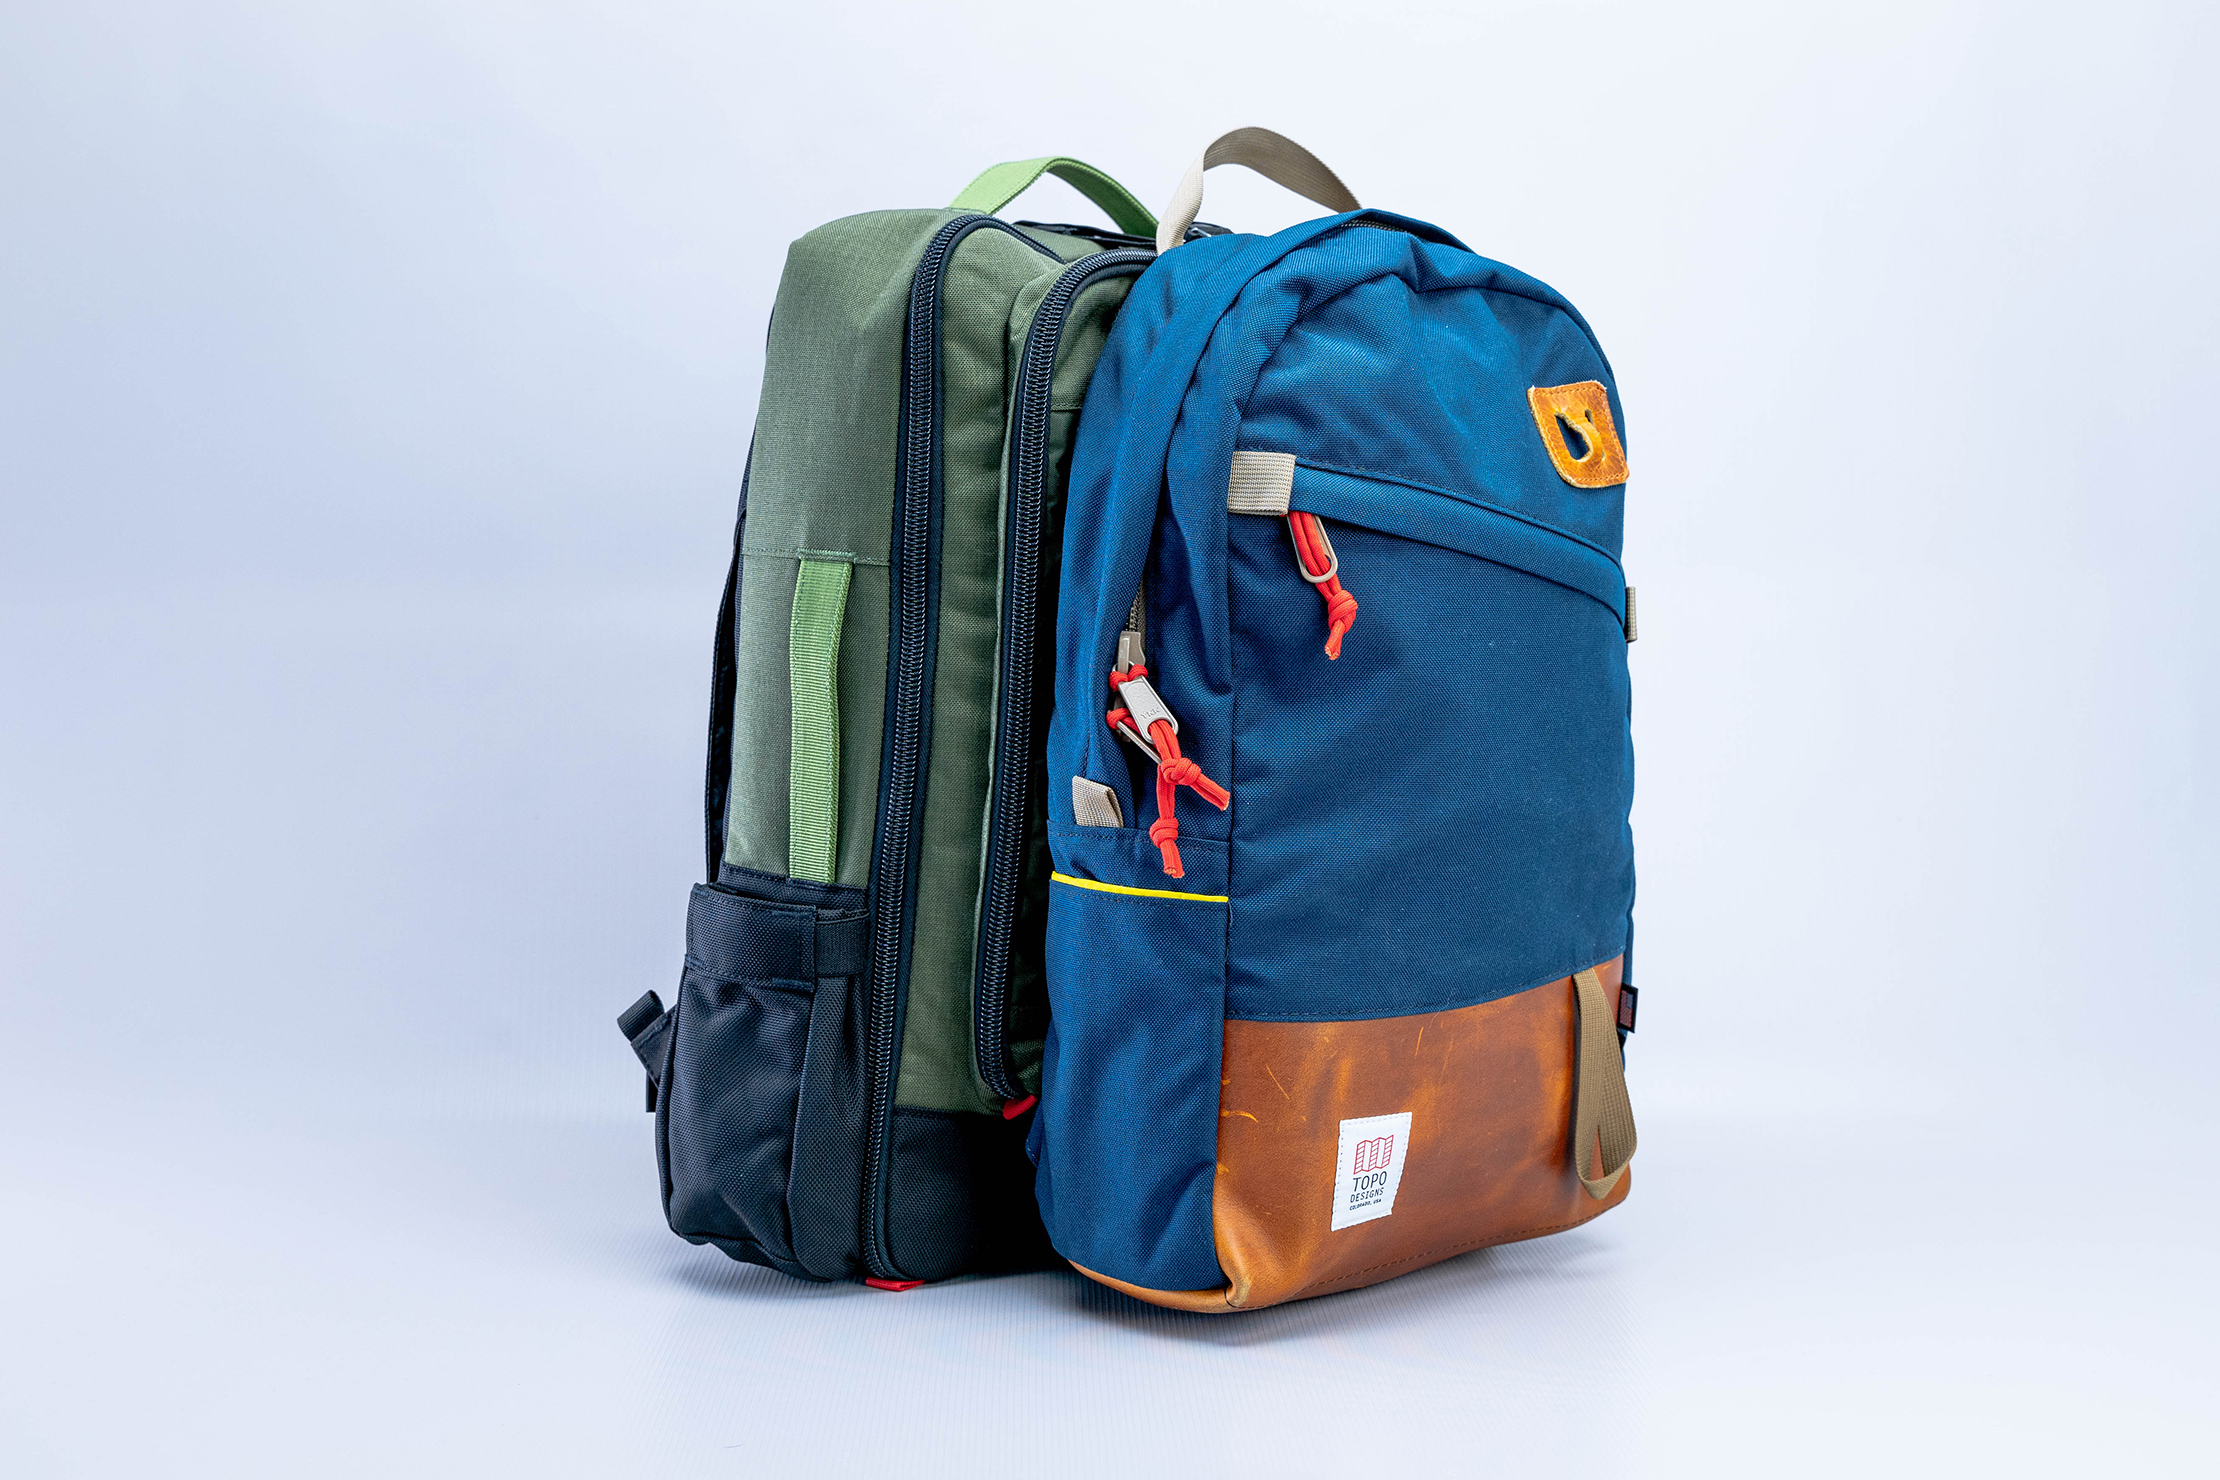 Topo Designs Global Travel Bag 30L Comparison